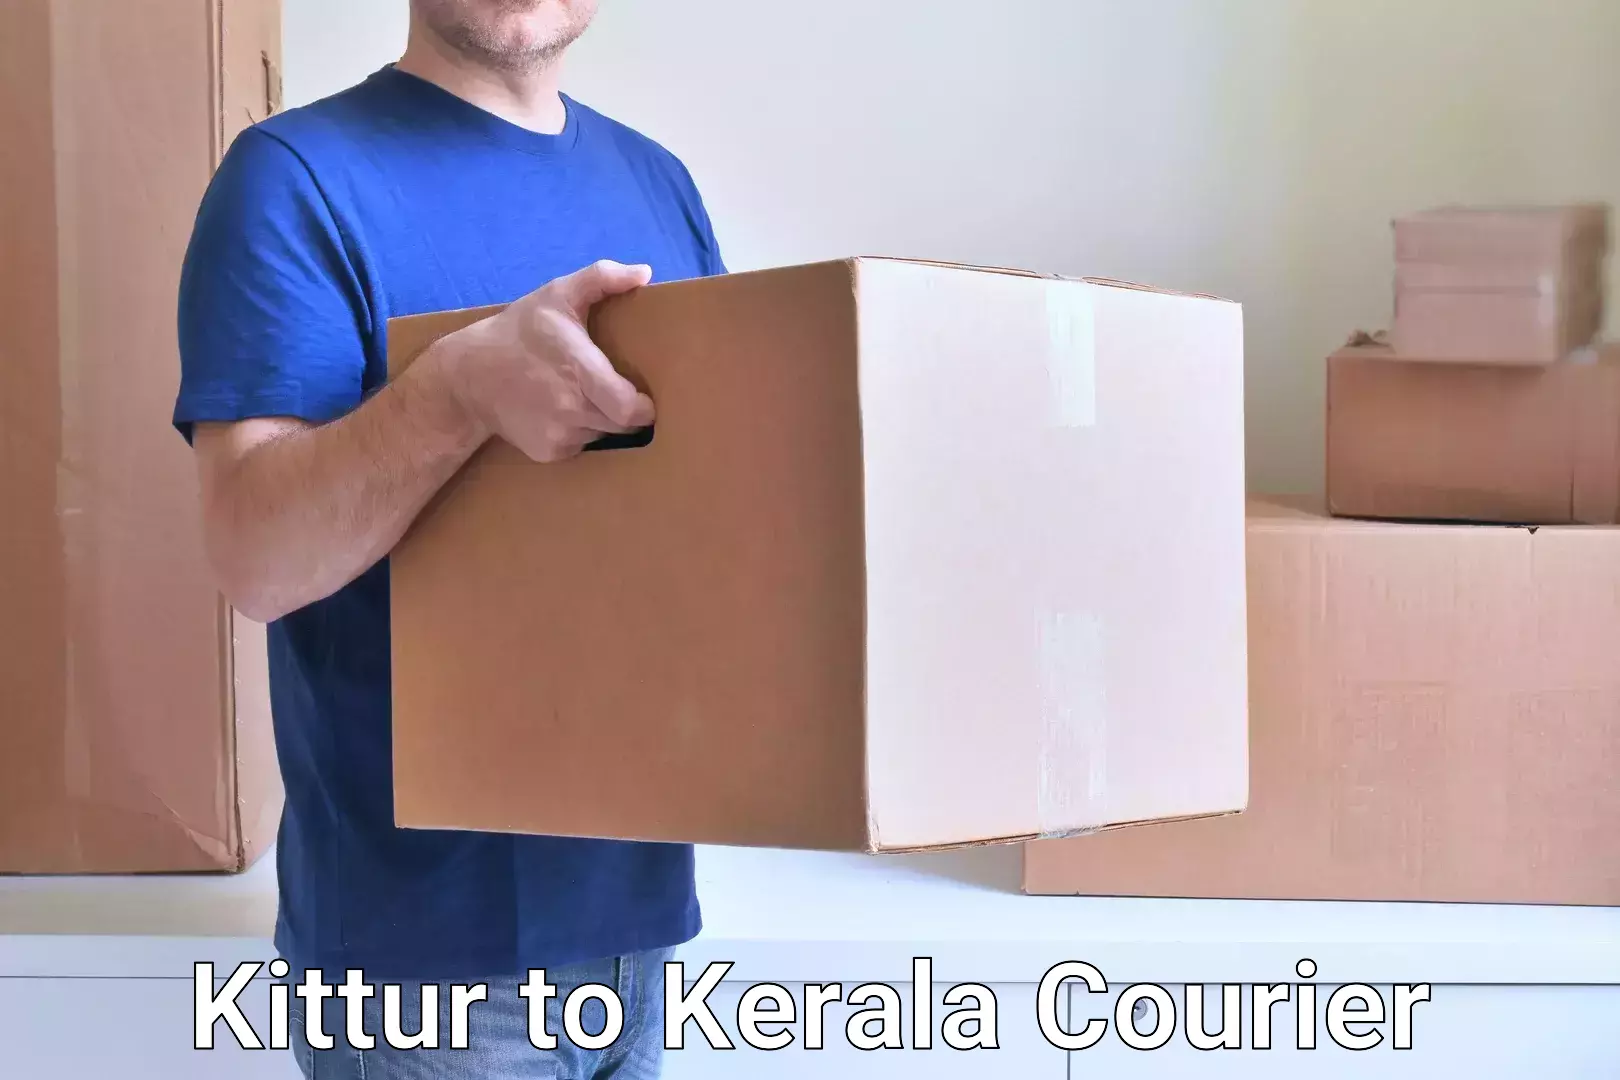 International parcel service Kittur to Edappal